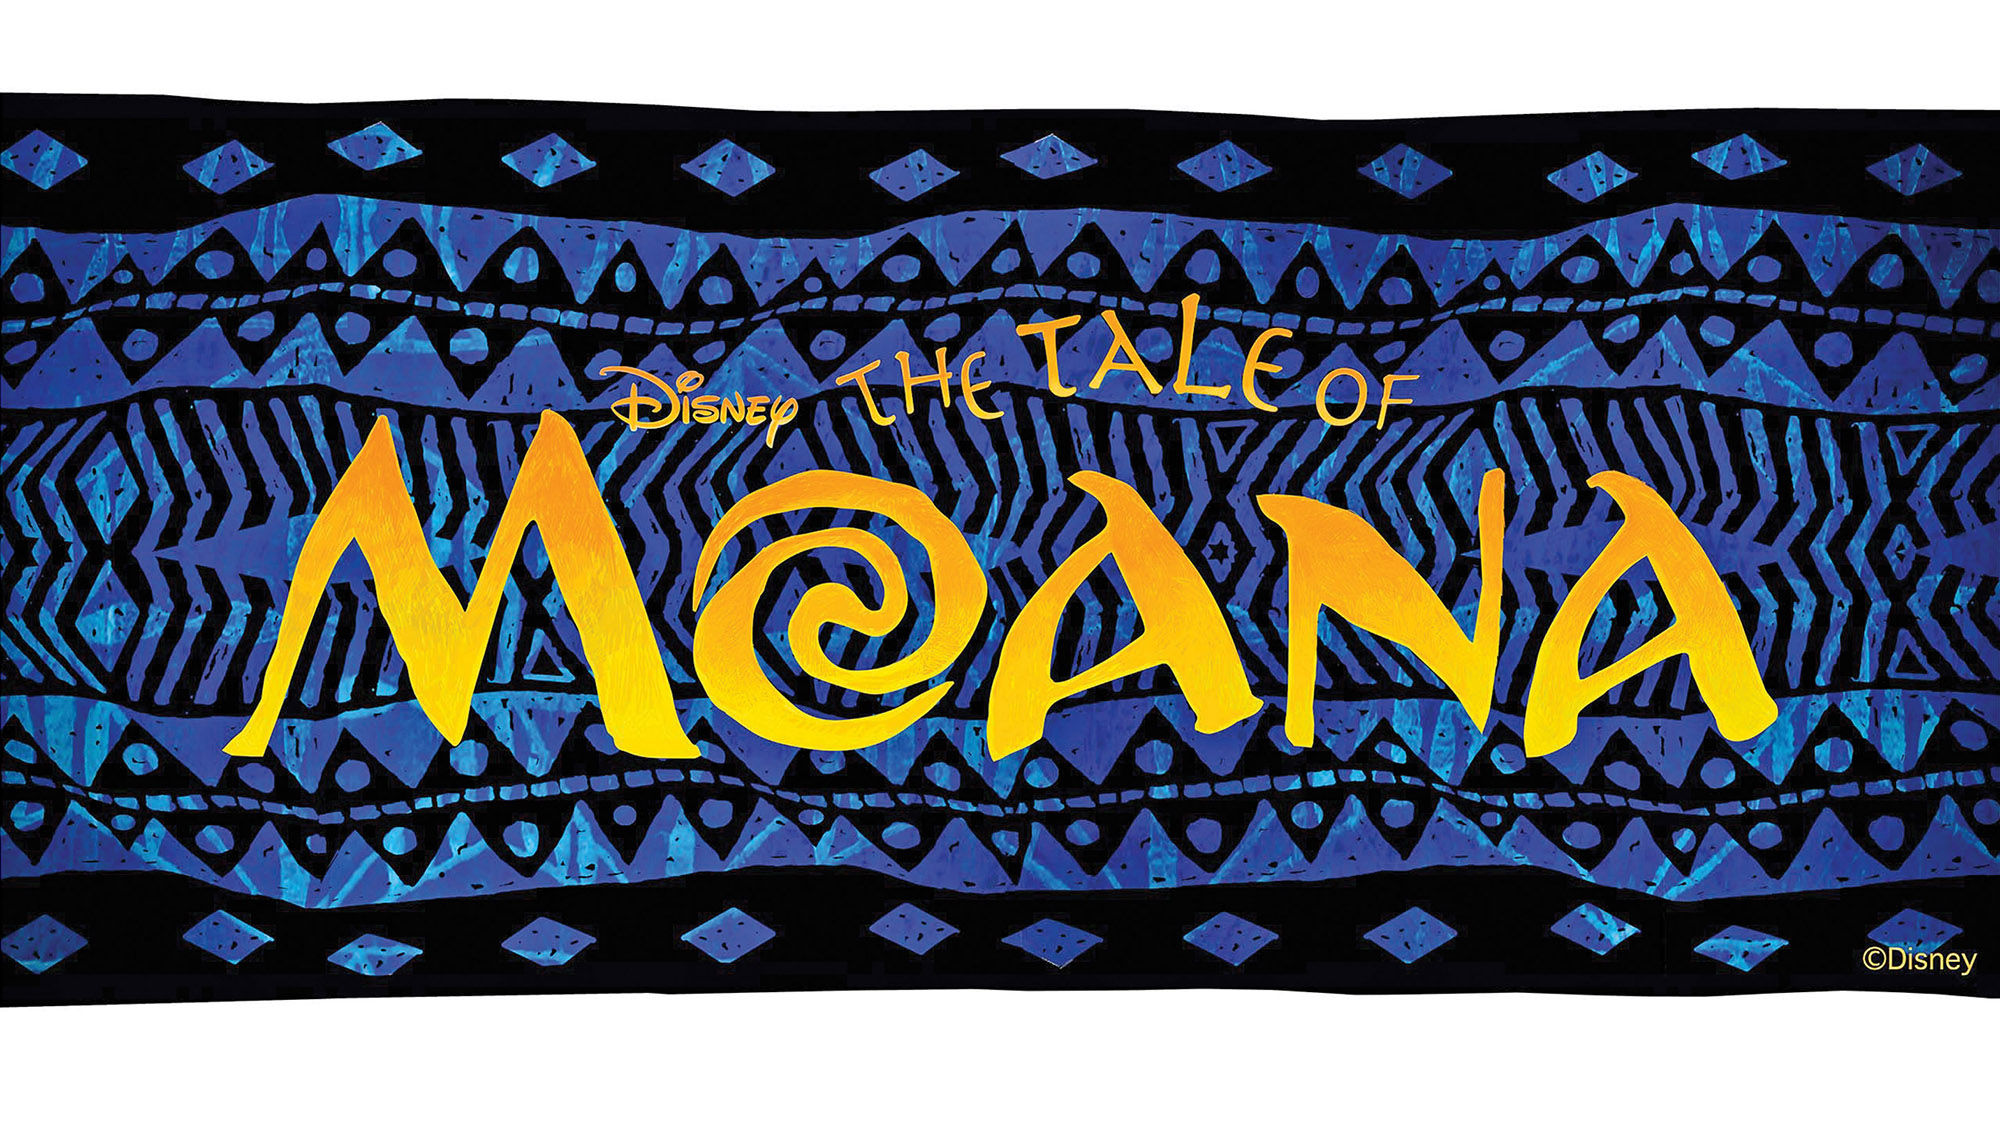 Disney Treasure entertainment to include Moana show